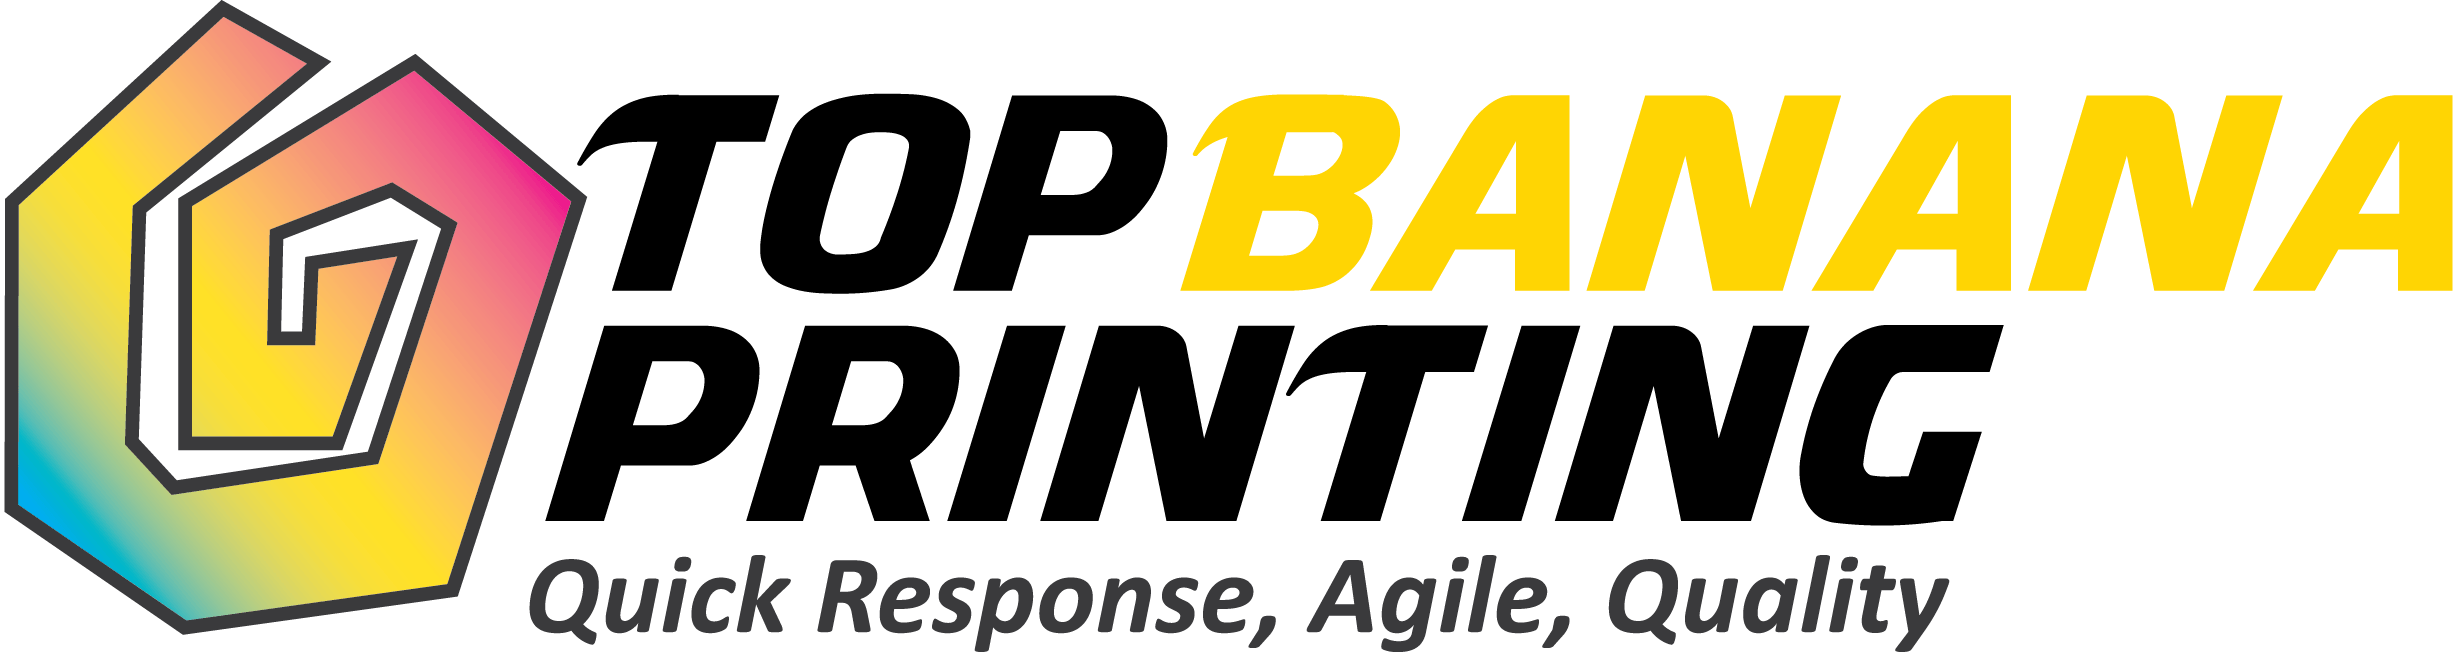 DTG Printing Logo - Direct to Garment Printing. Top Banana Philadelphia